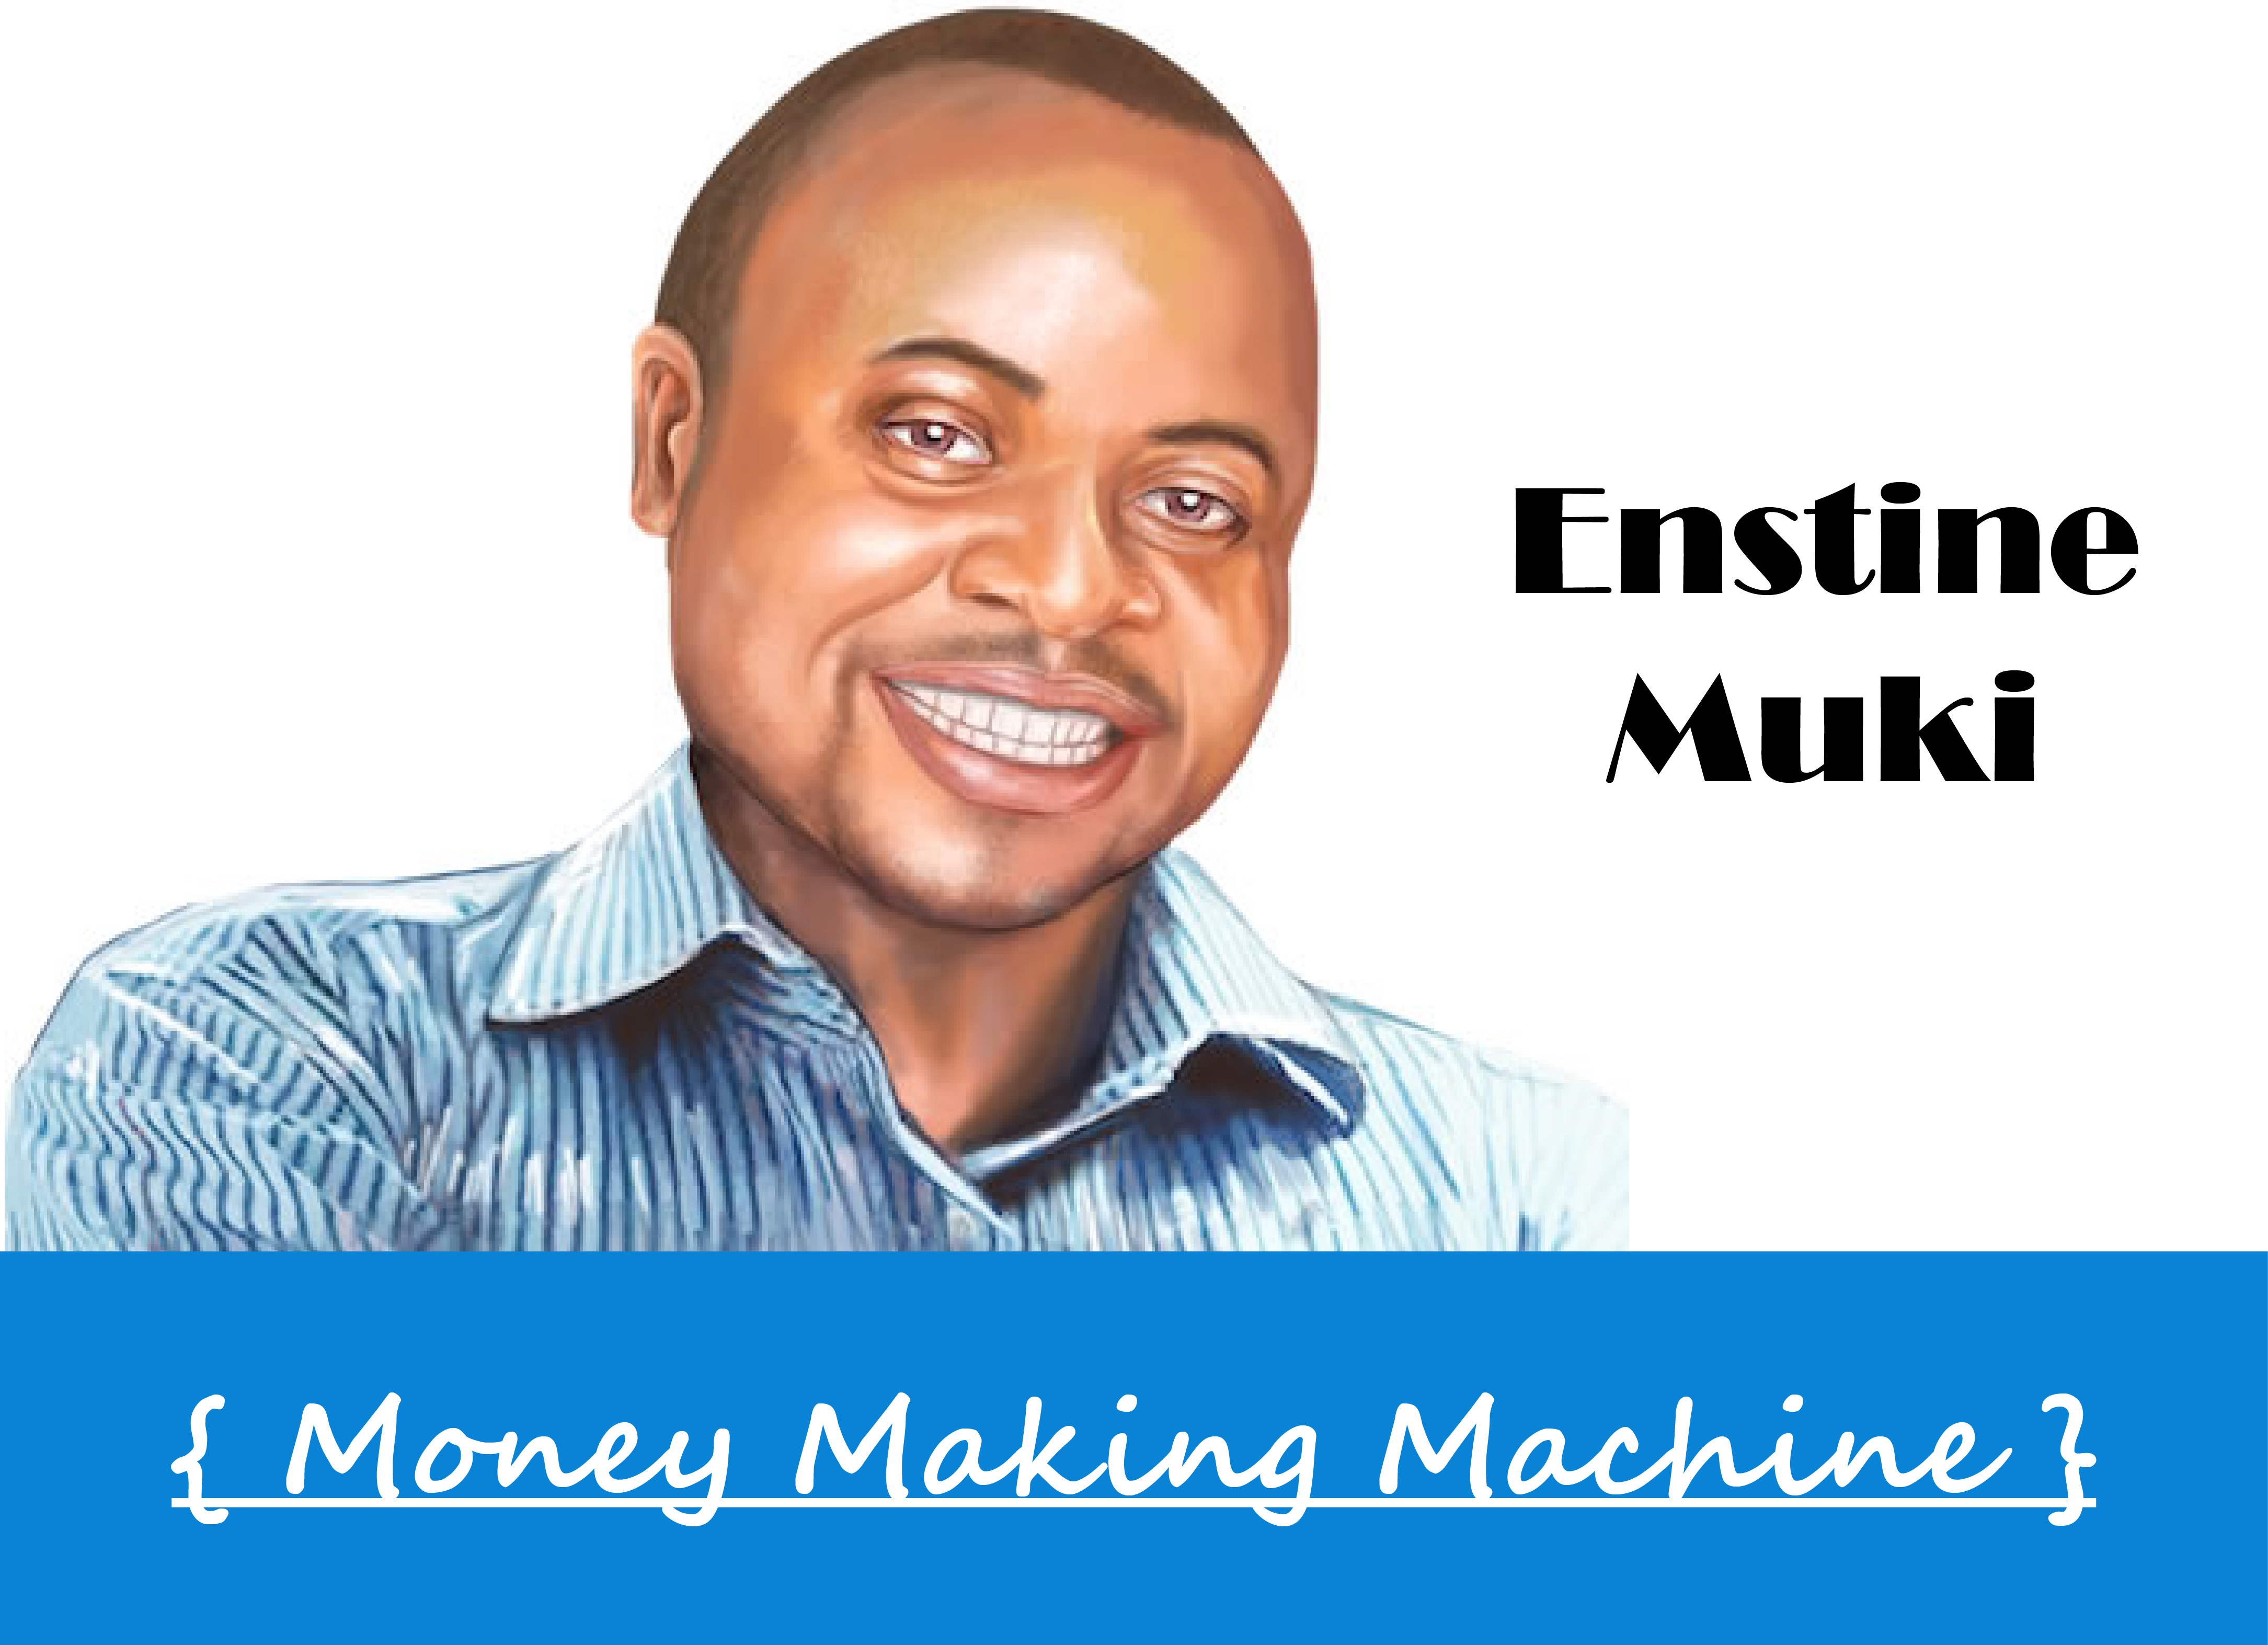 Enstine Muki - Money Making Machine 